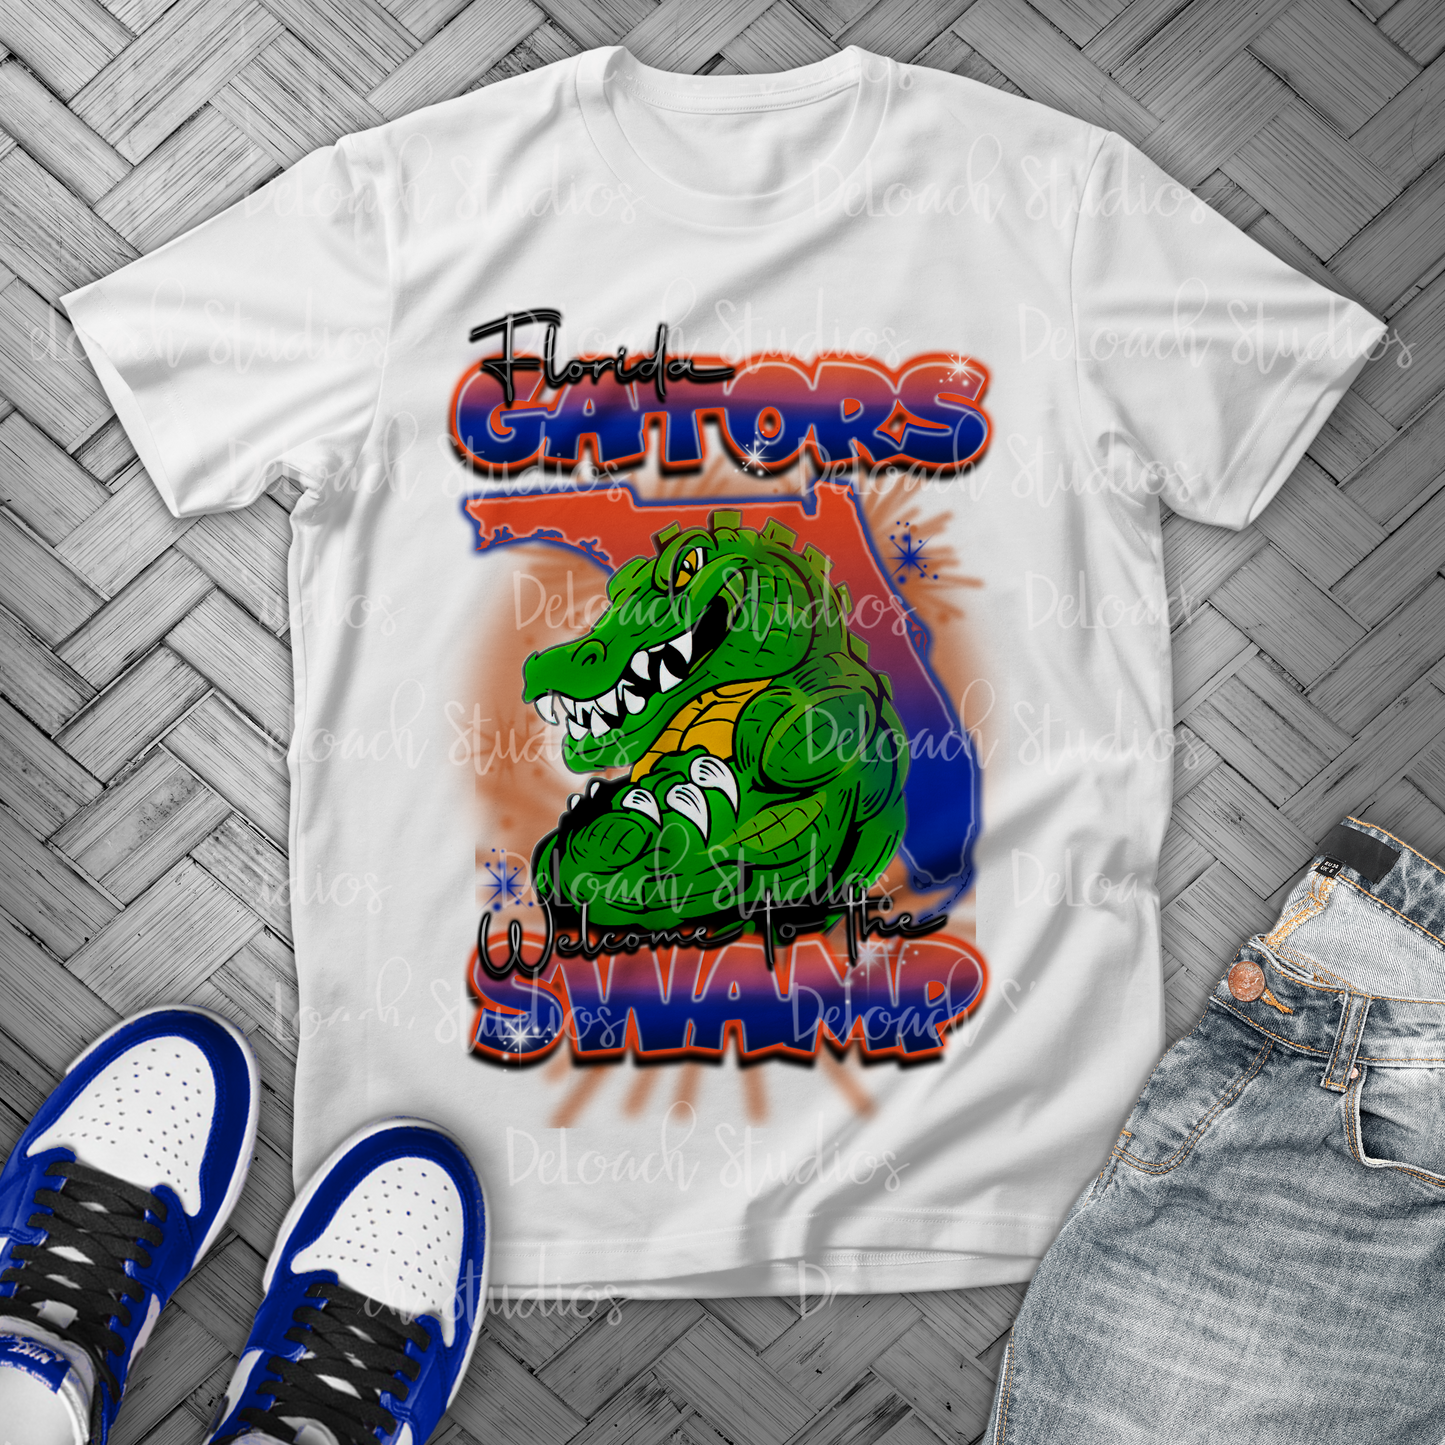 Gators - File Only